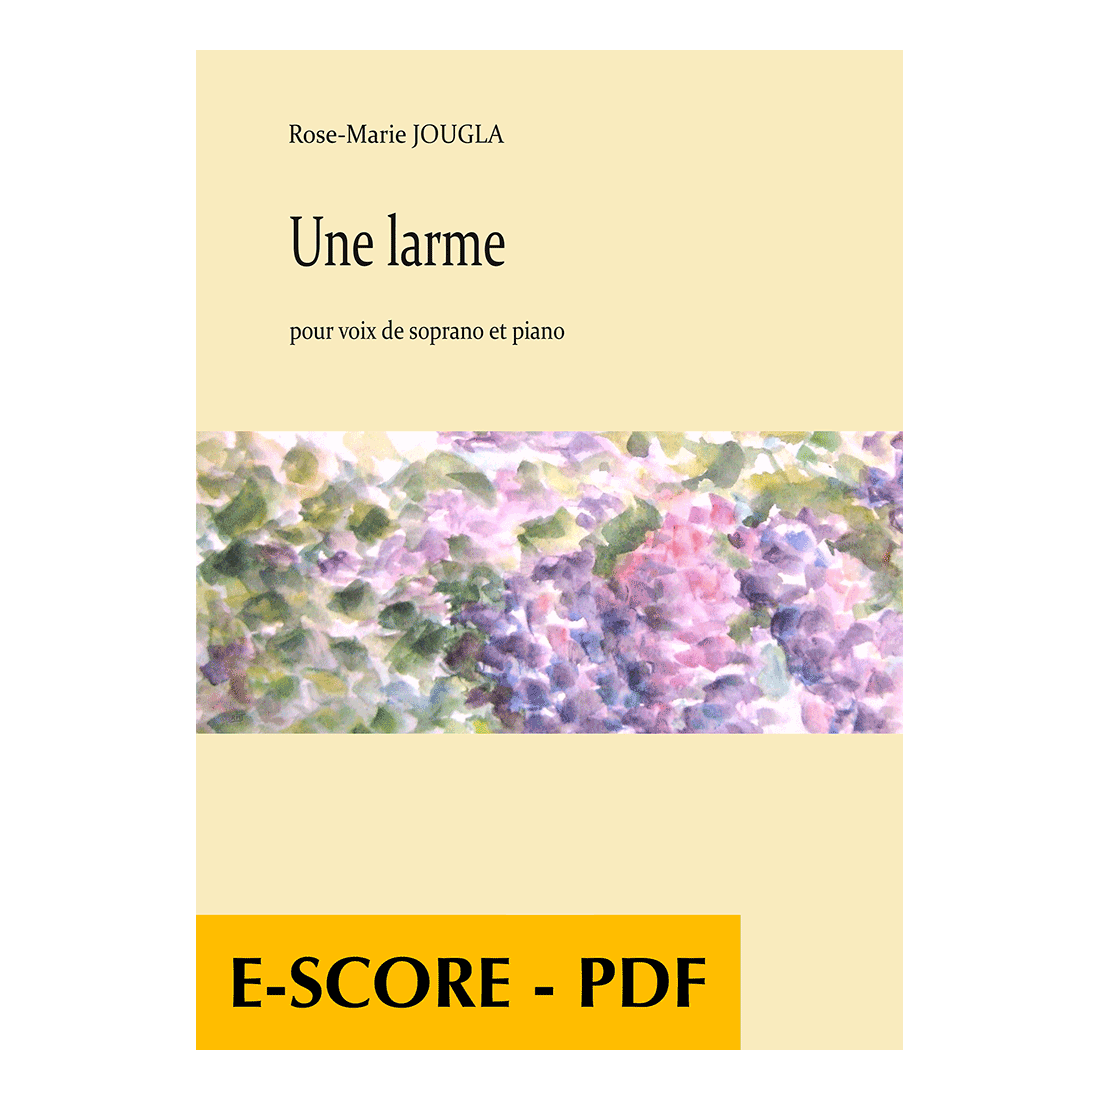 Une larme für Sopran und Klavier - E-score PDF